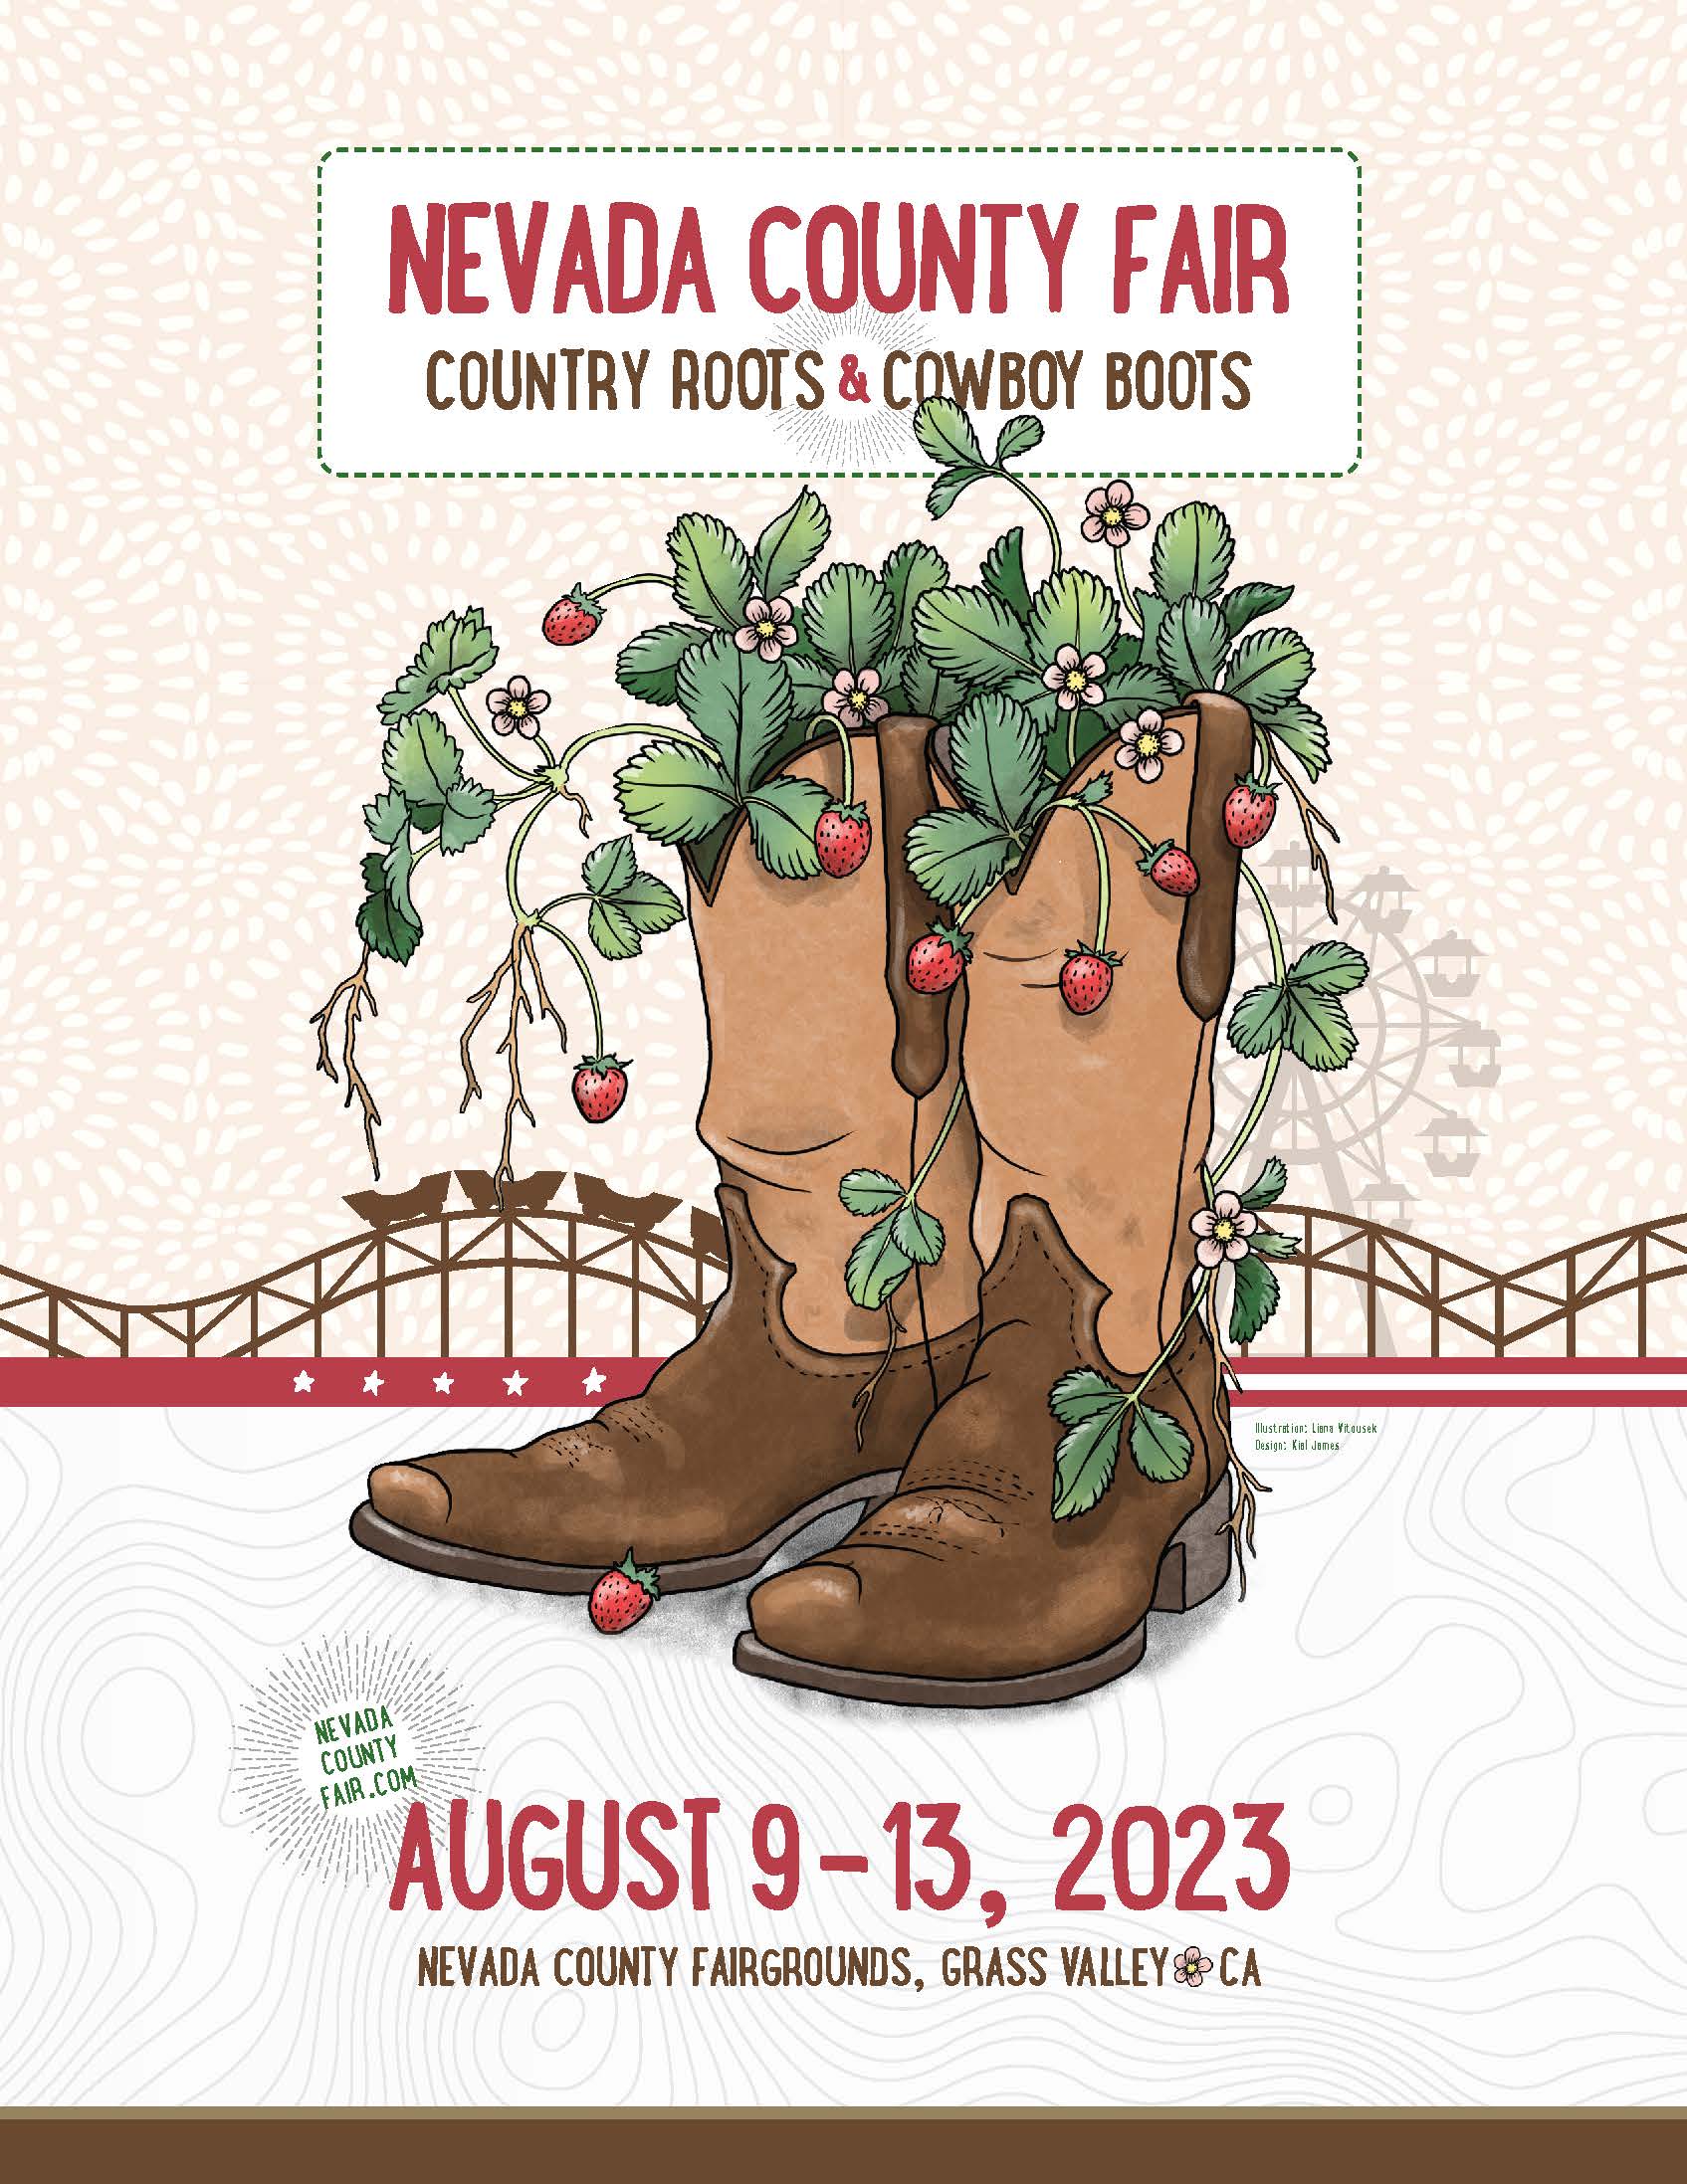 Nevada County Fairgrounds, Grass Valley, CA